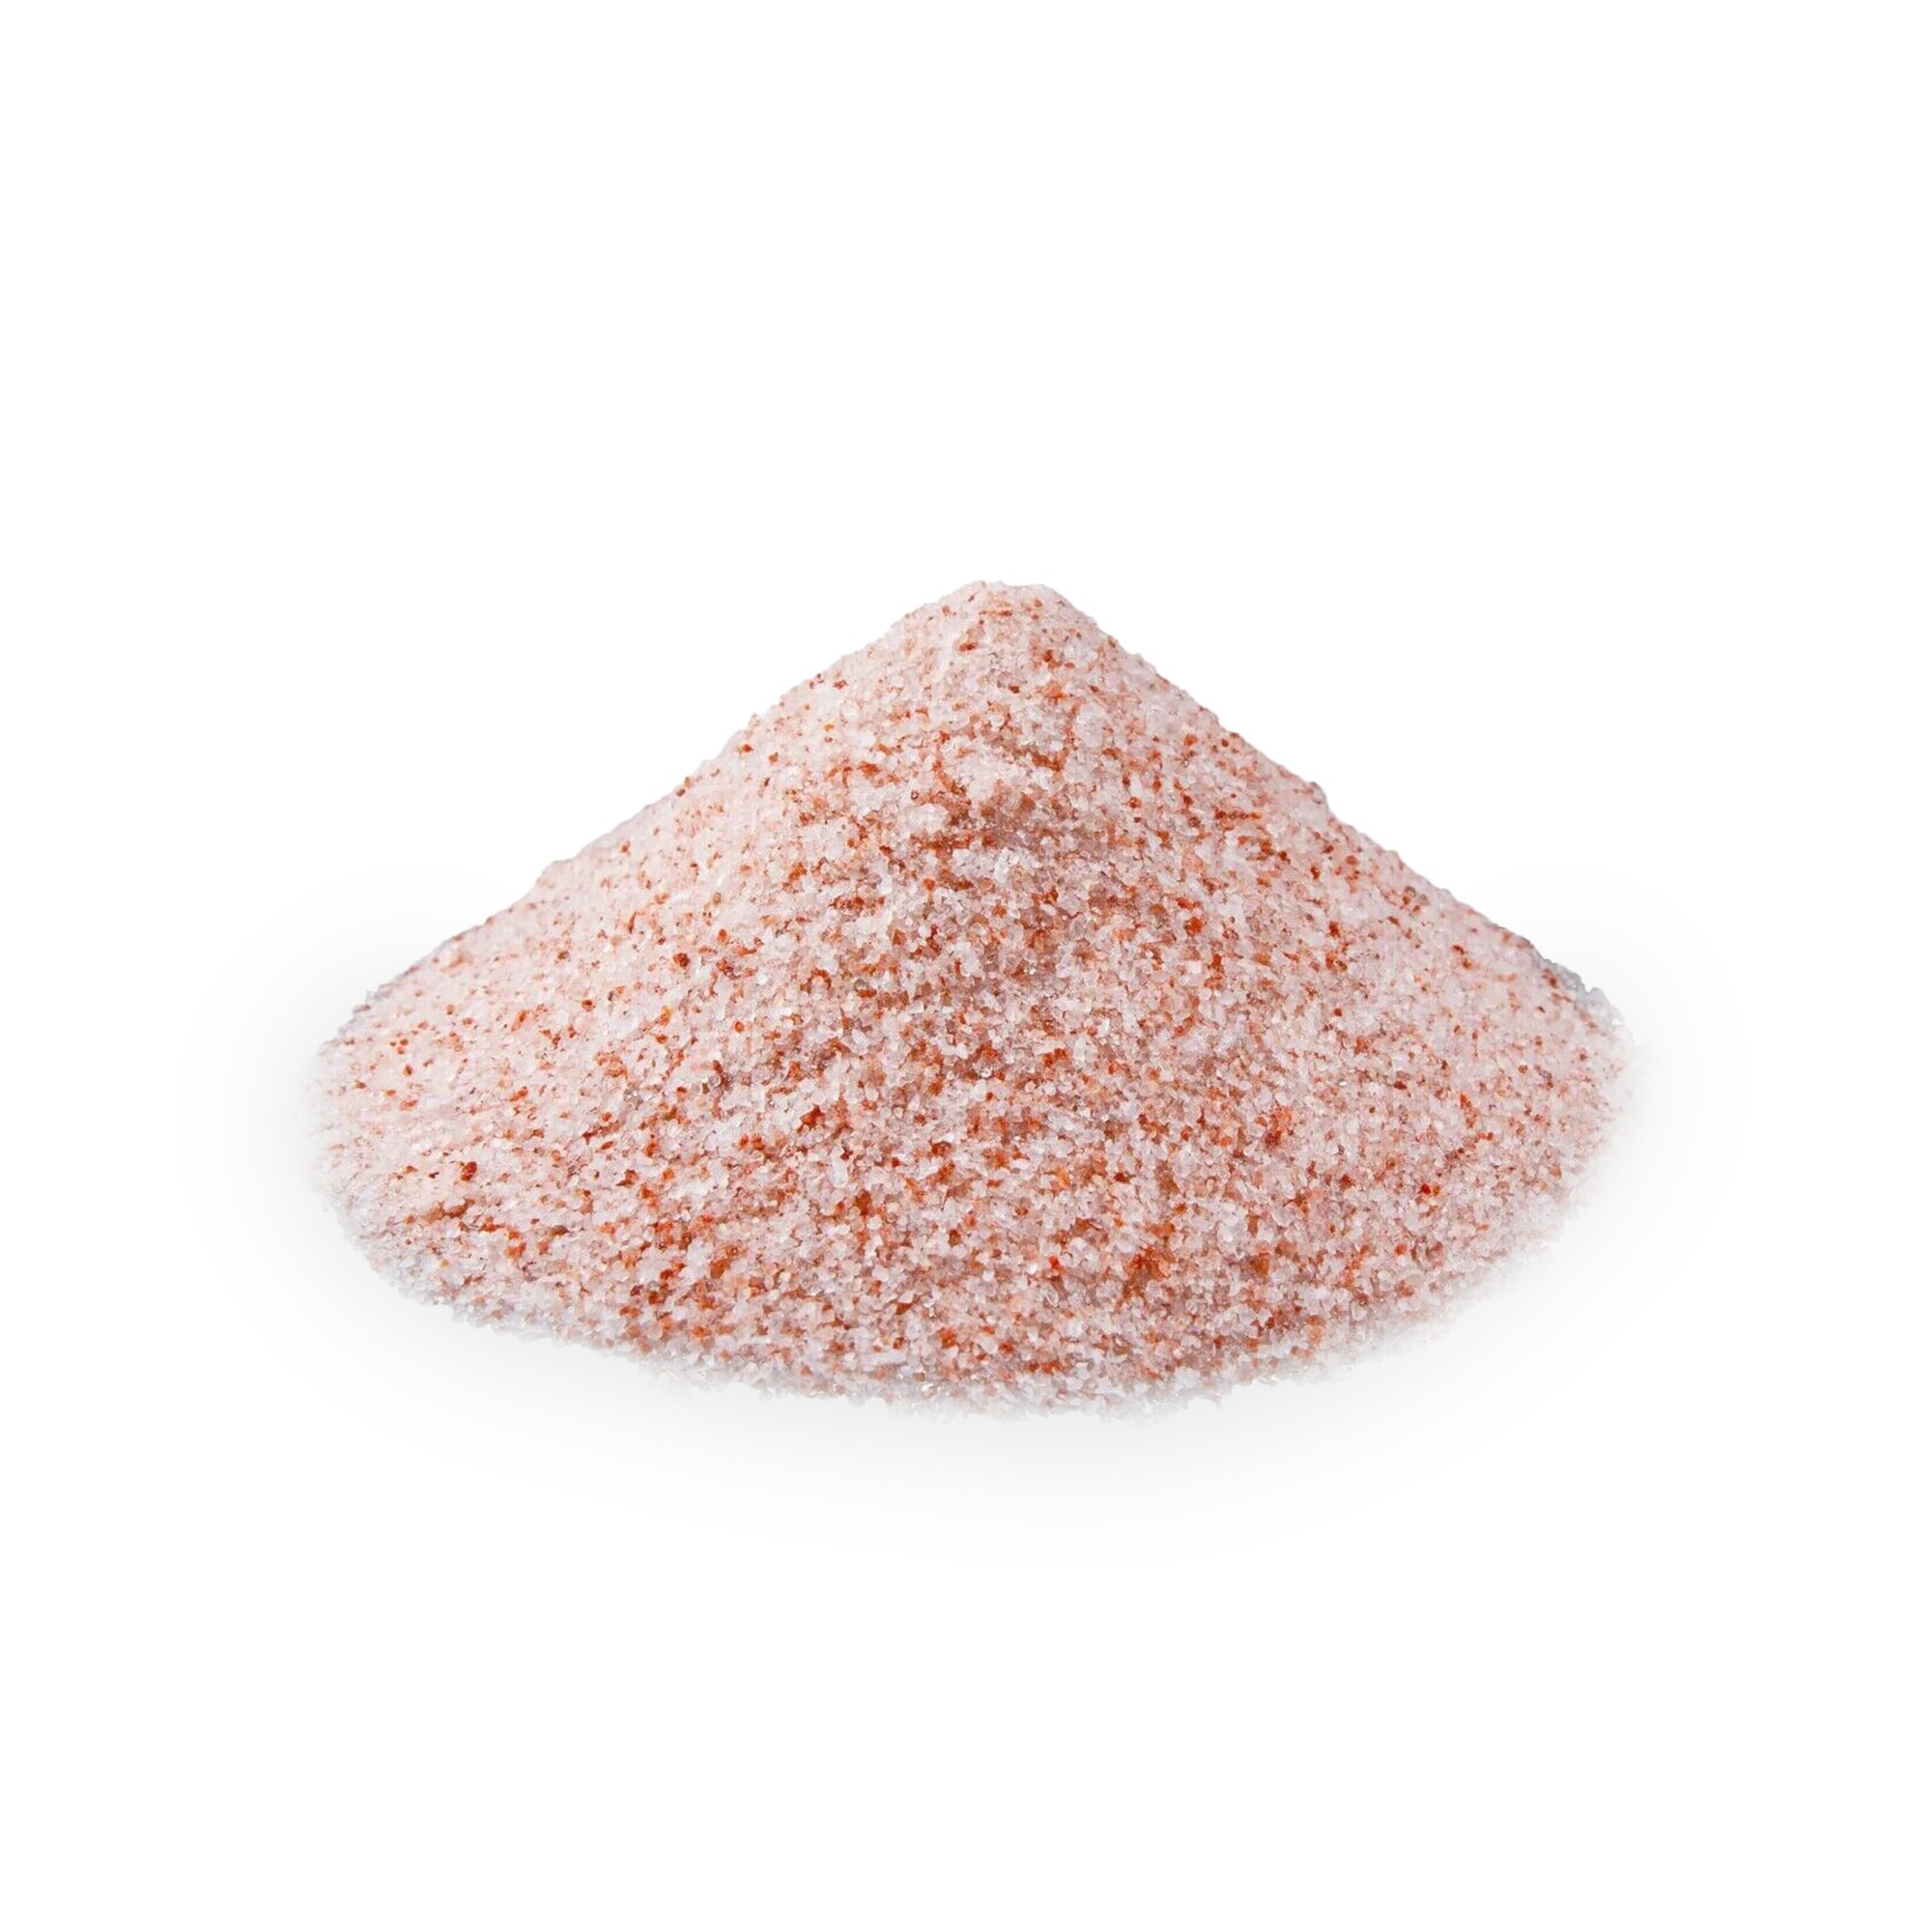 Edible Himalayan Pink Salt - Coarse Grain - 1 Pound